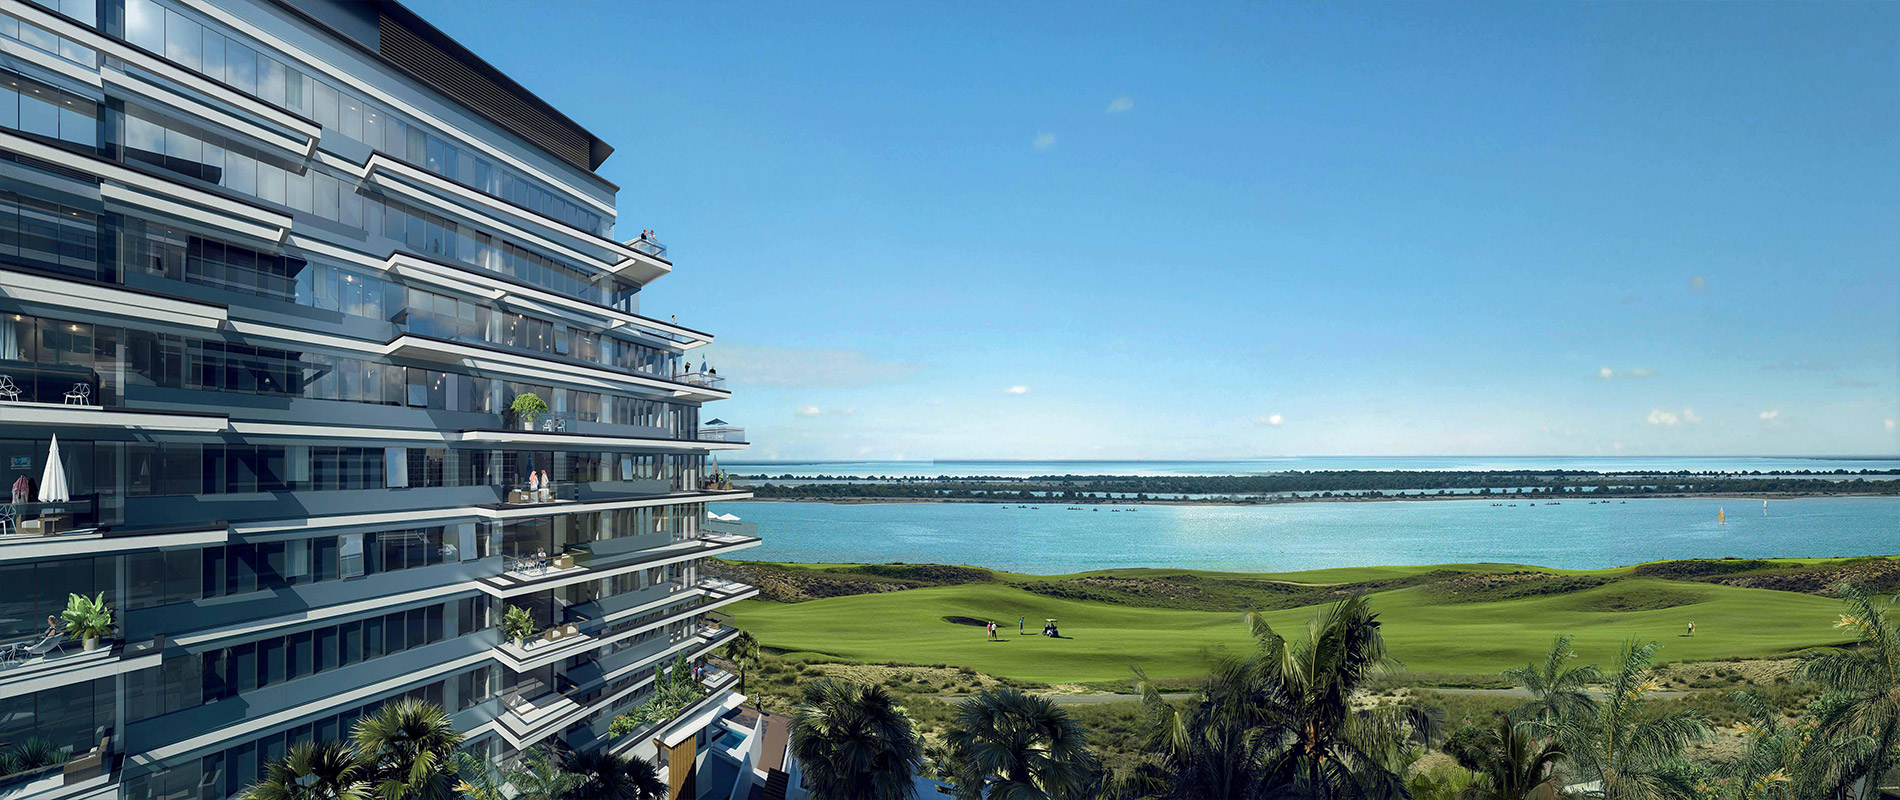 Mayan Luxury Waterfront Apartments - Yas Island Abu Dhabi.